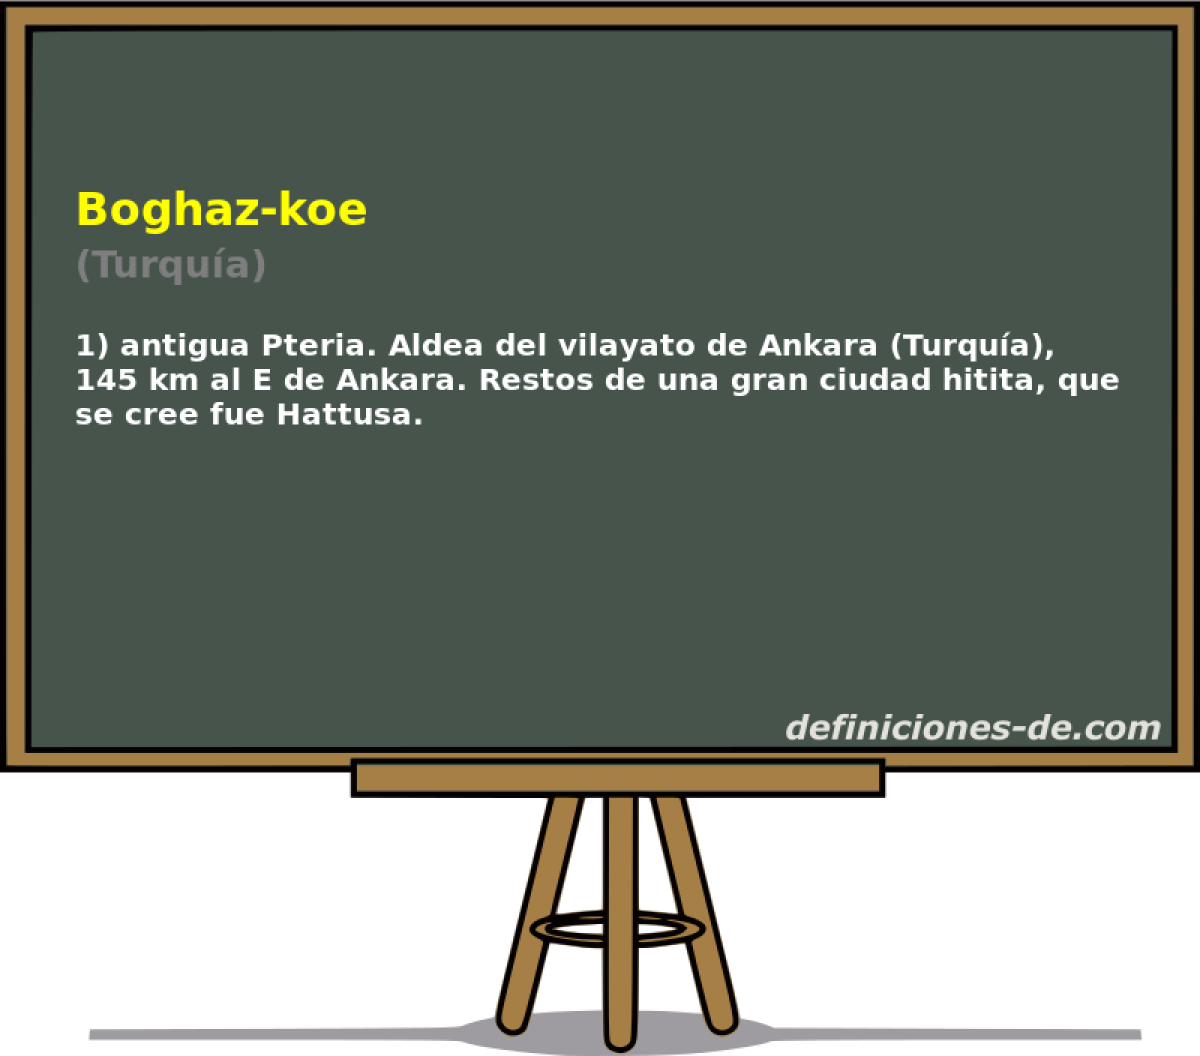 Boghaz-koe (Turqua)